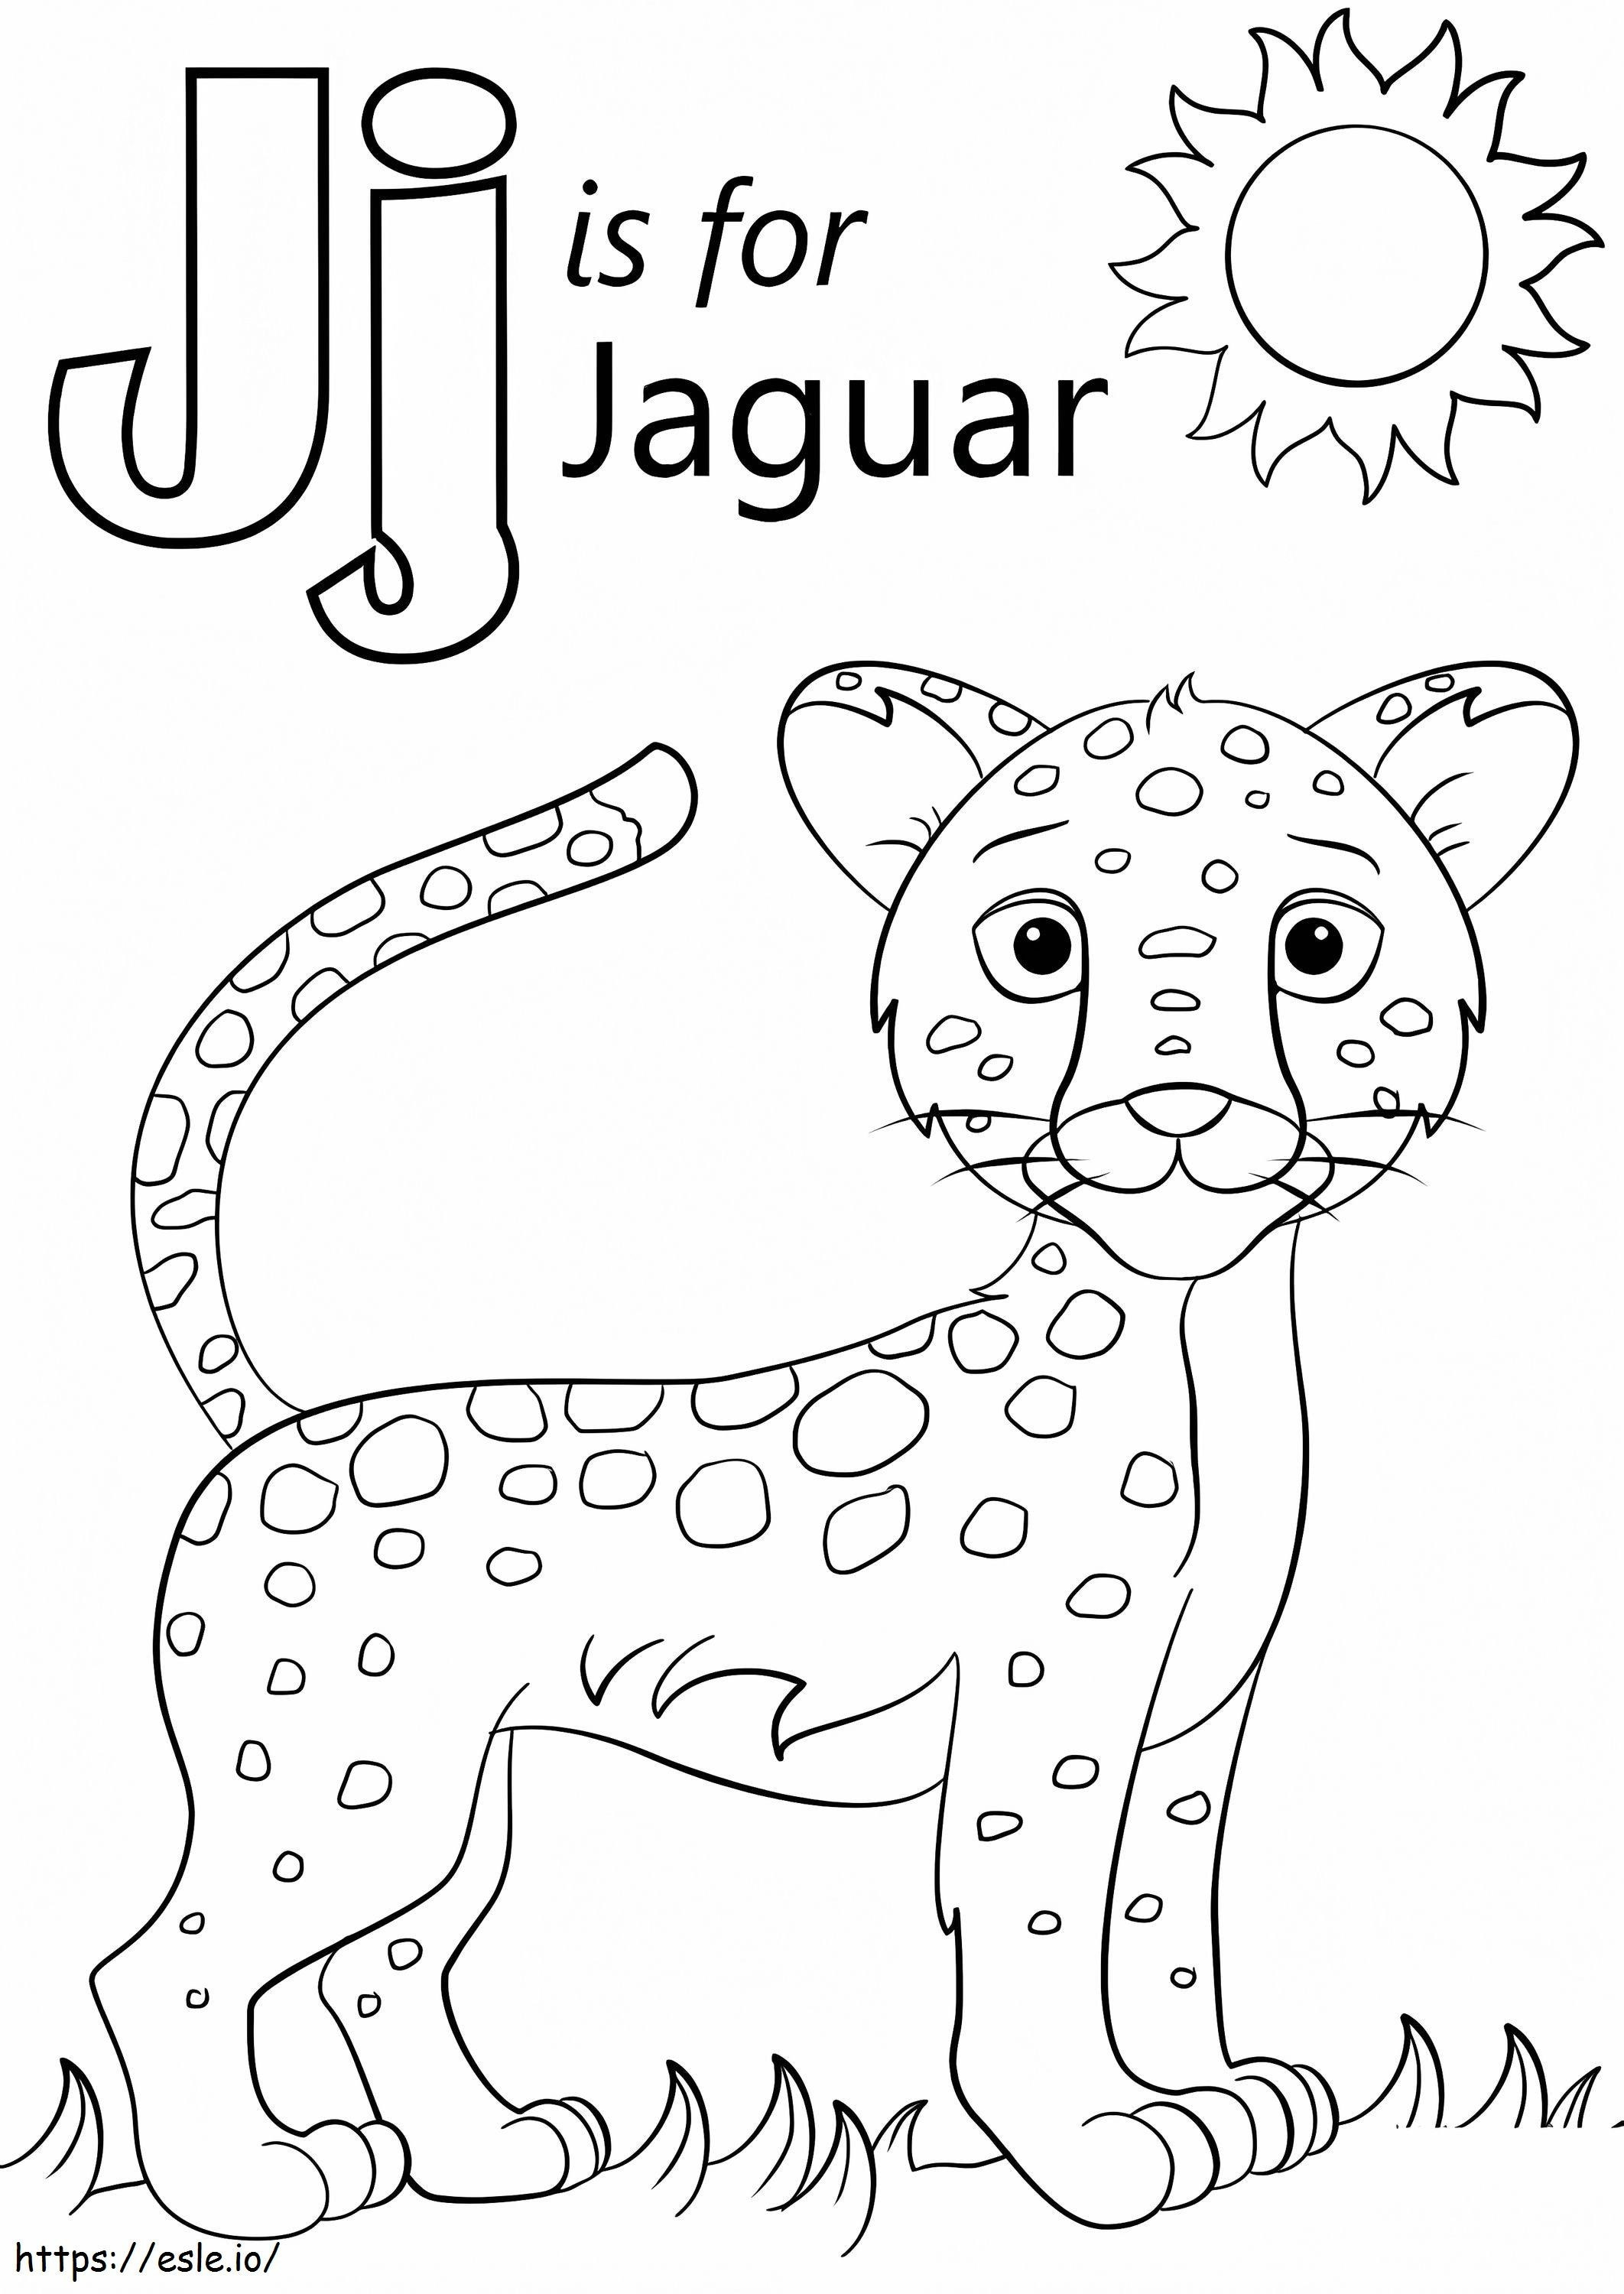 List Jaguara J kolorowanka